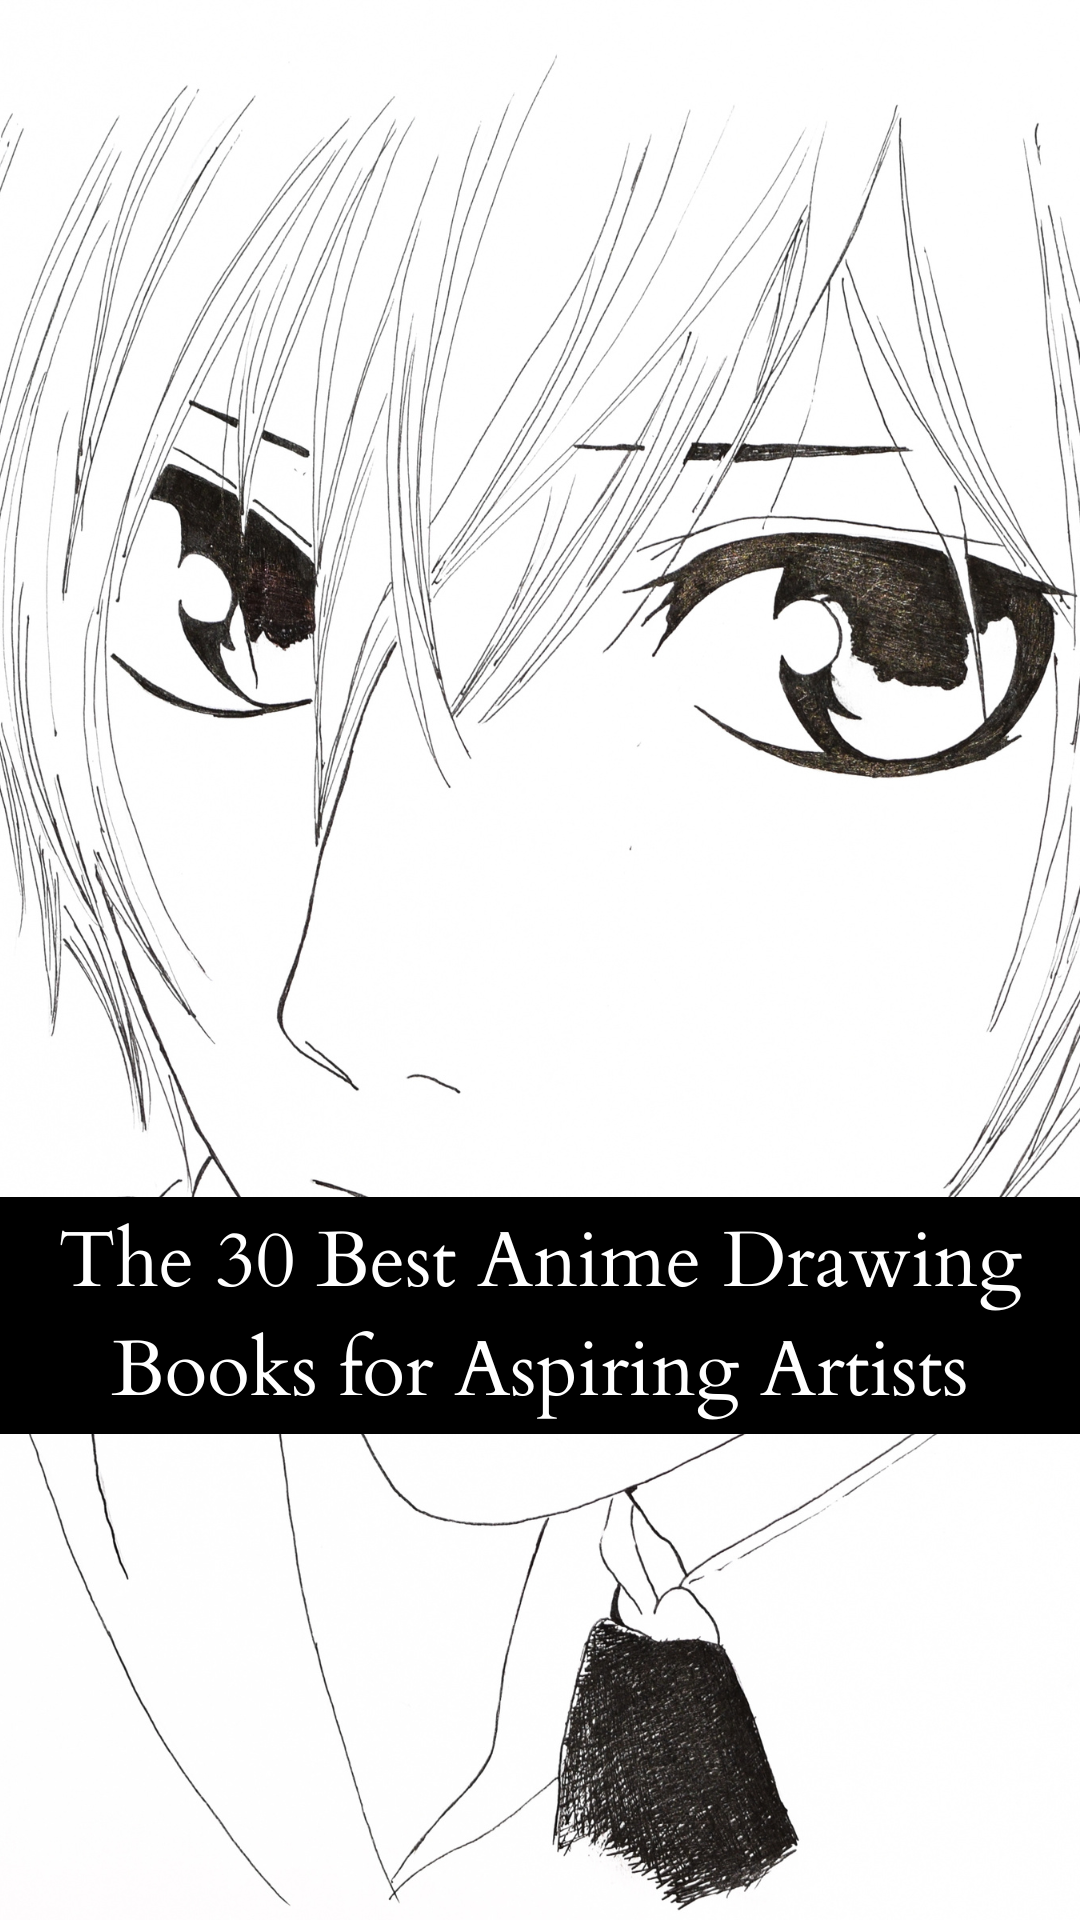 Draw Fashionable Manga Girls: An Anime Drawing Workbook for